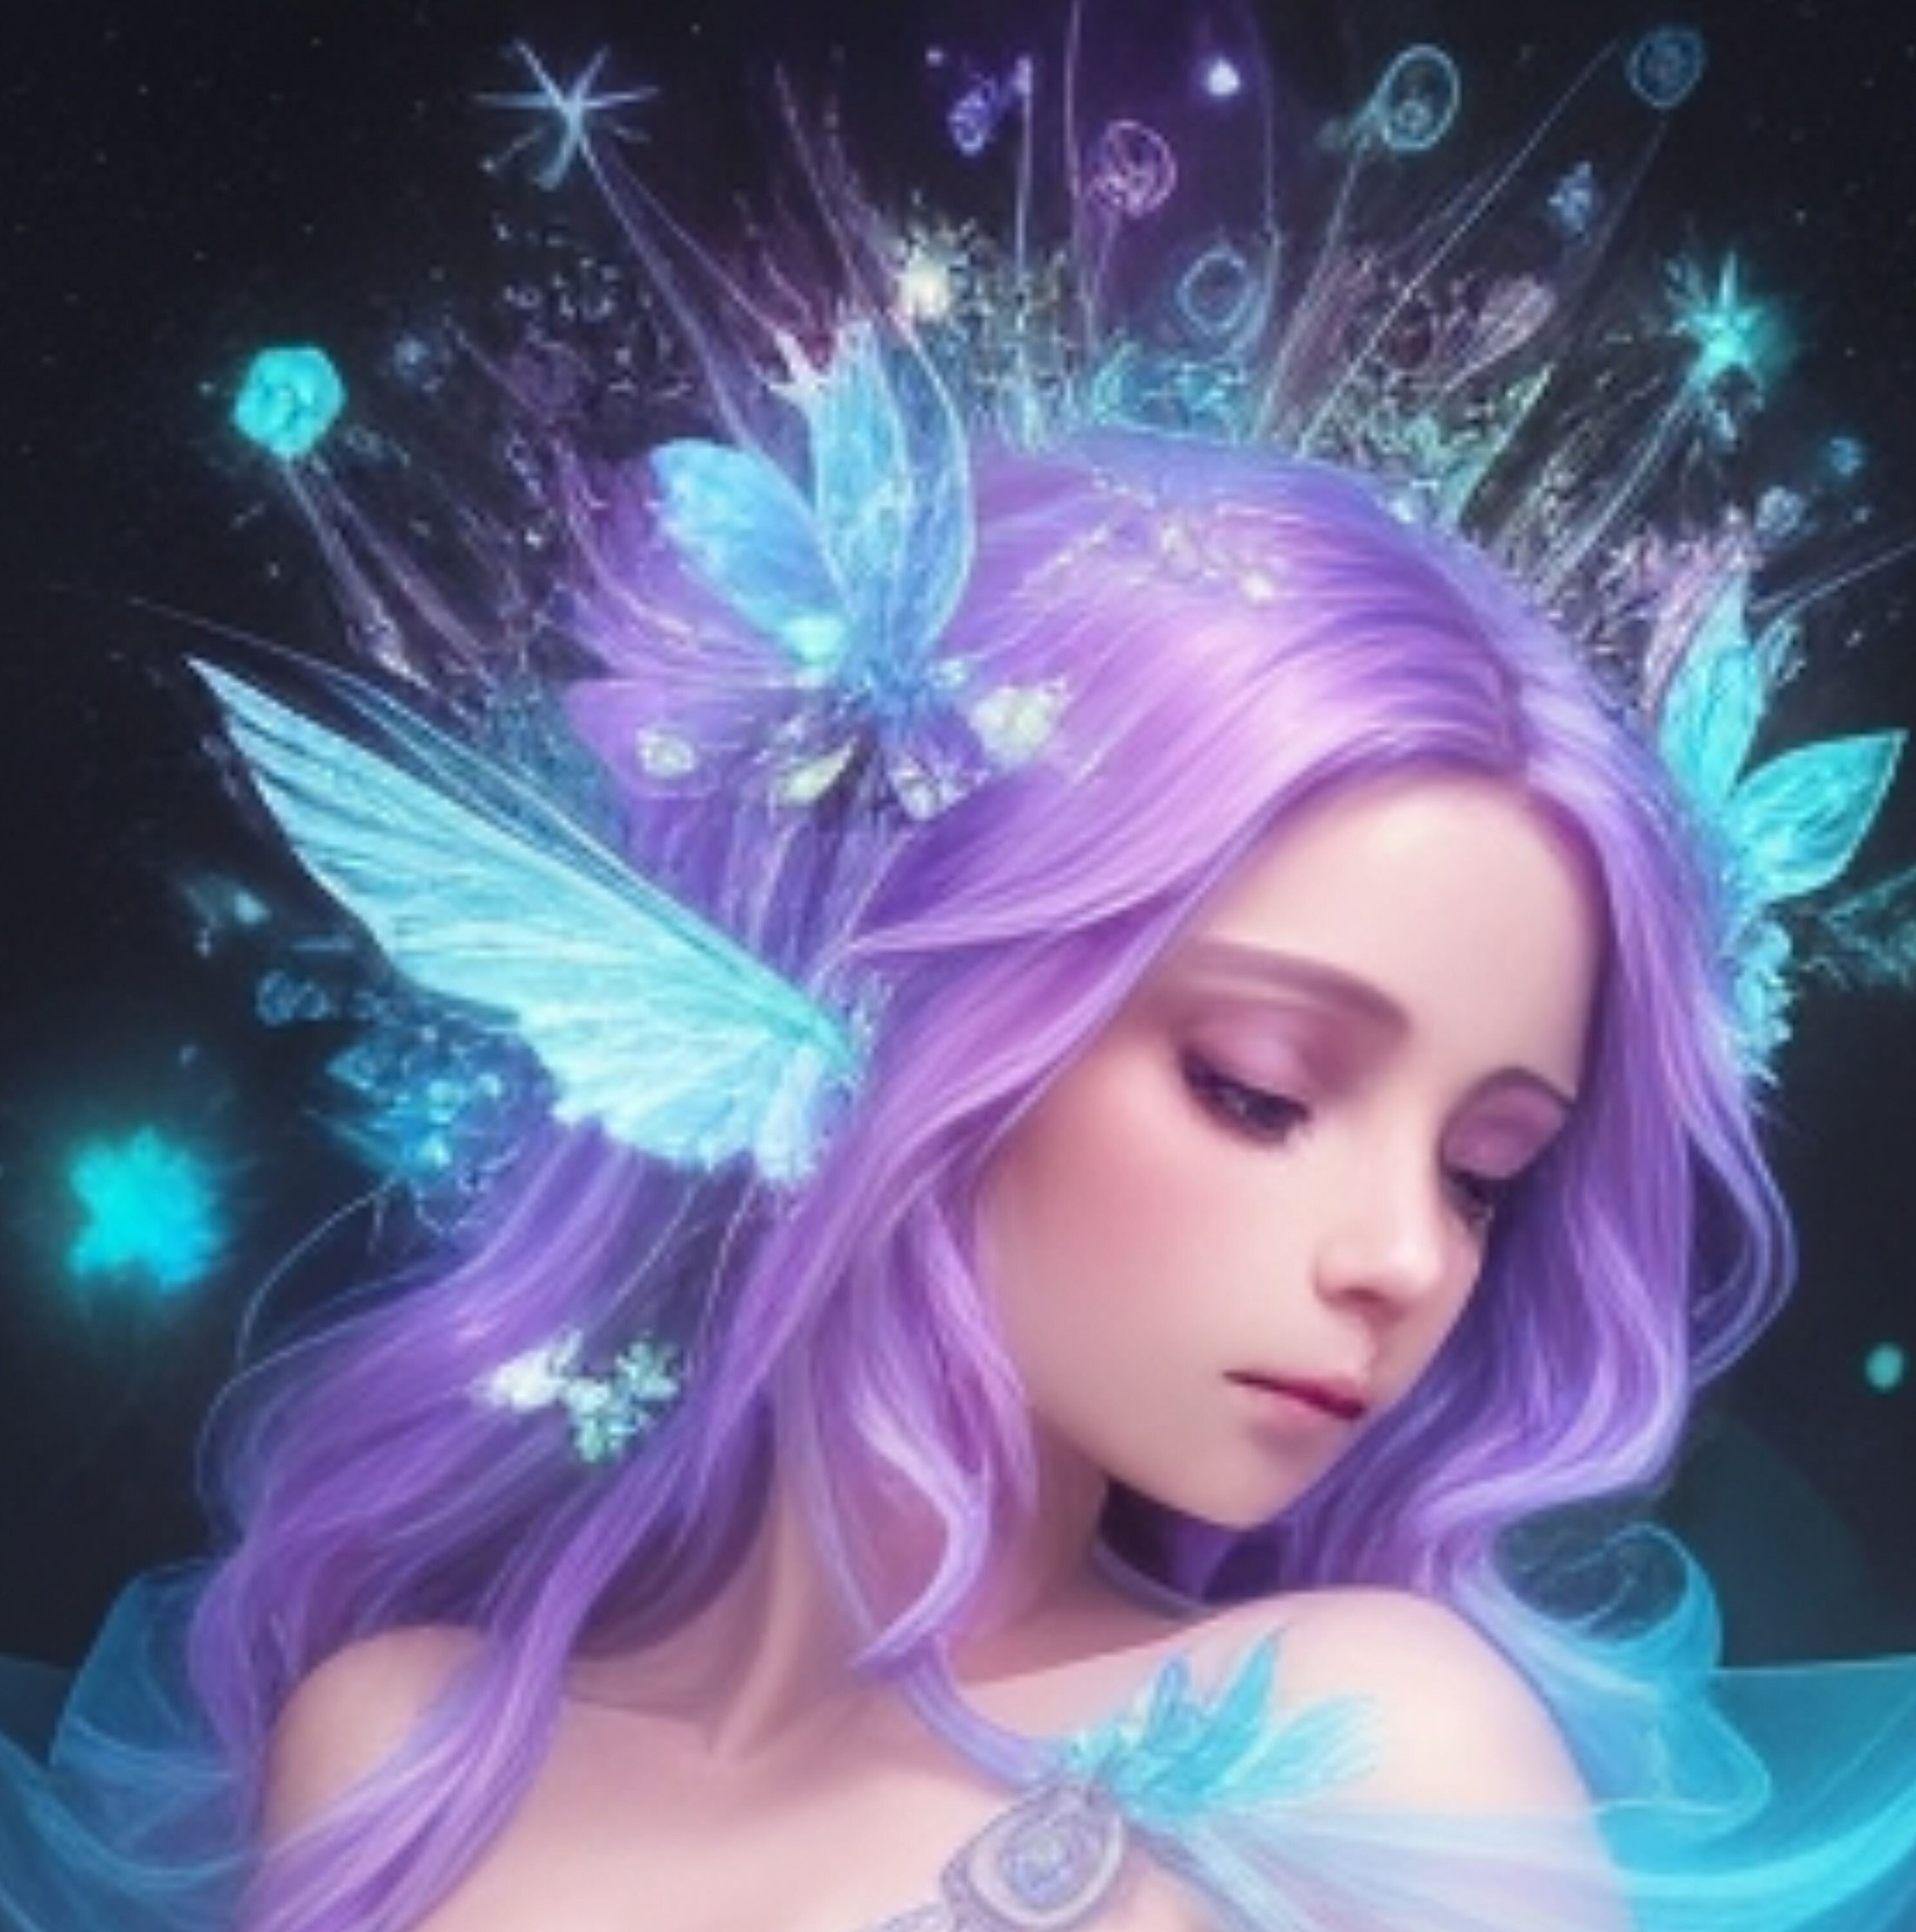 Magic Fairy Ethereal World Fantasy Art: Home Wall Decor Digital ...